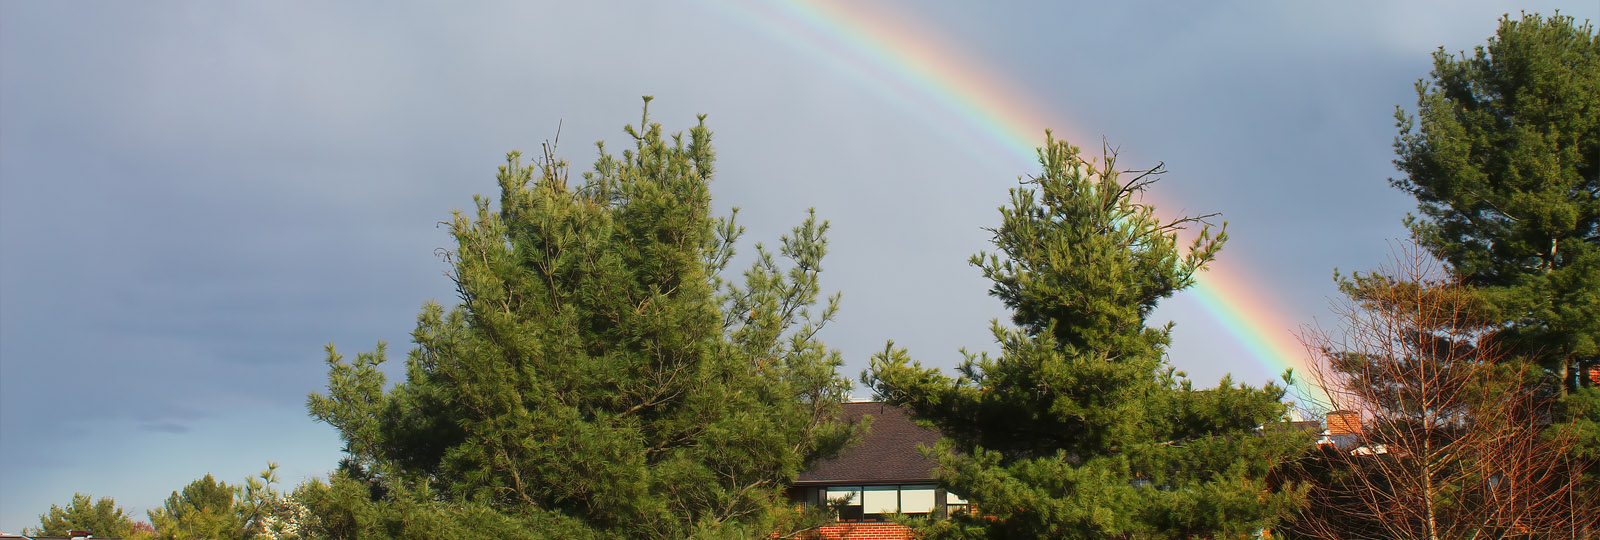 kayhart arboretum summer rainbow